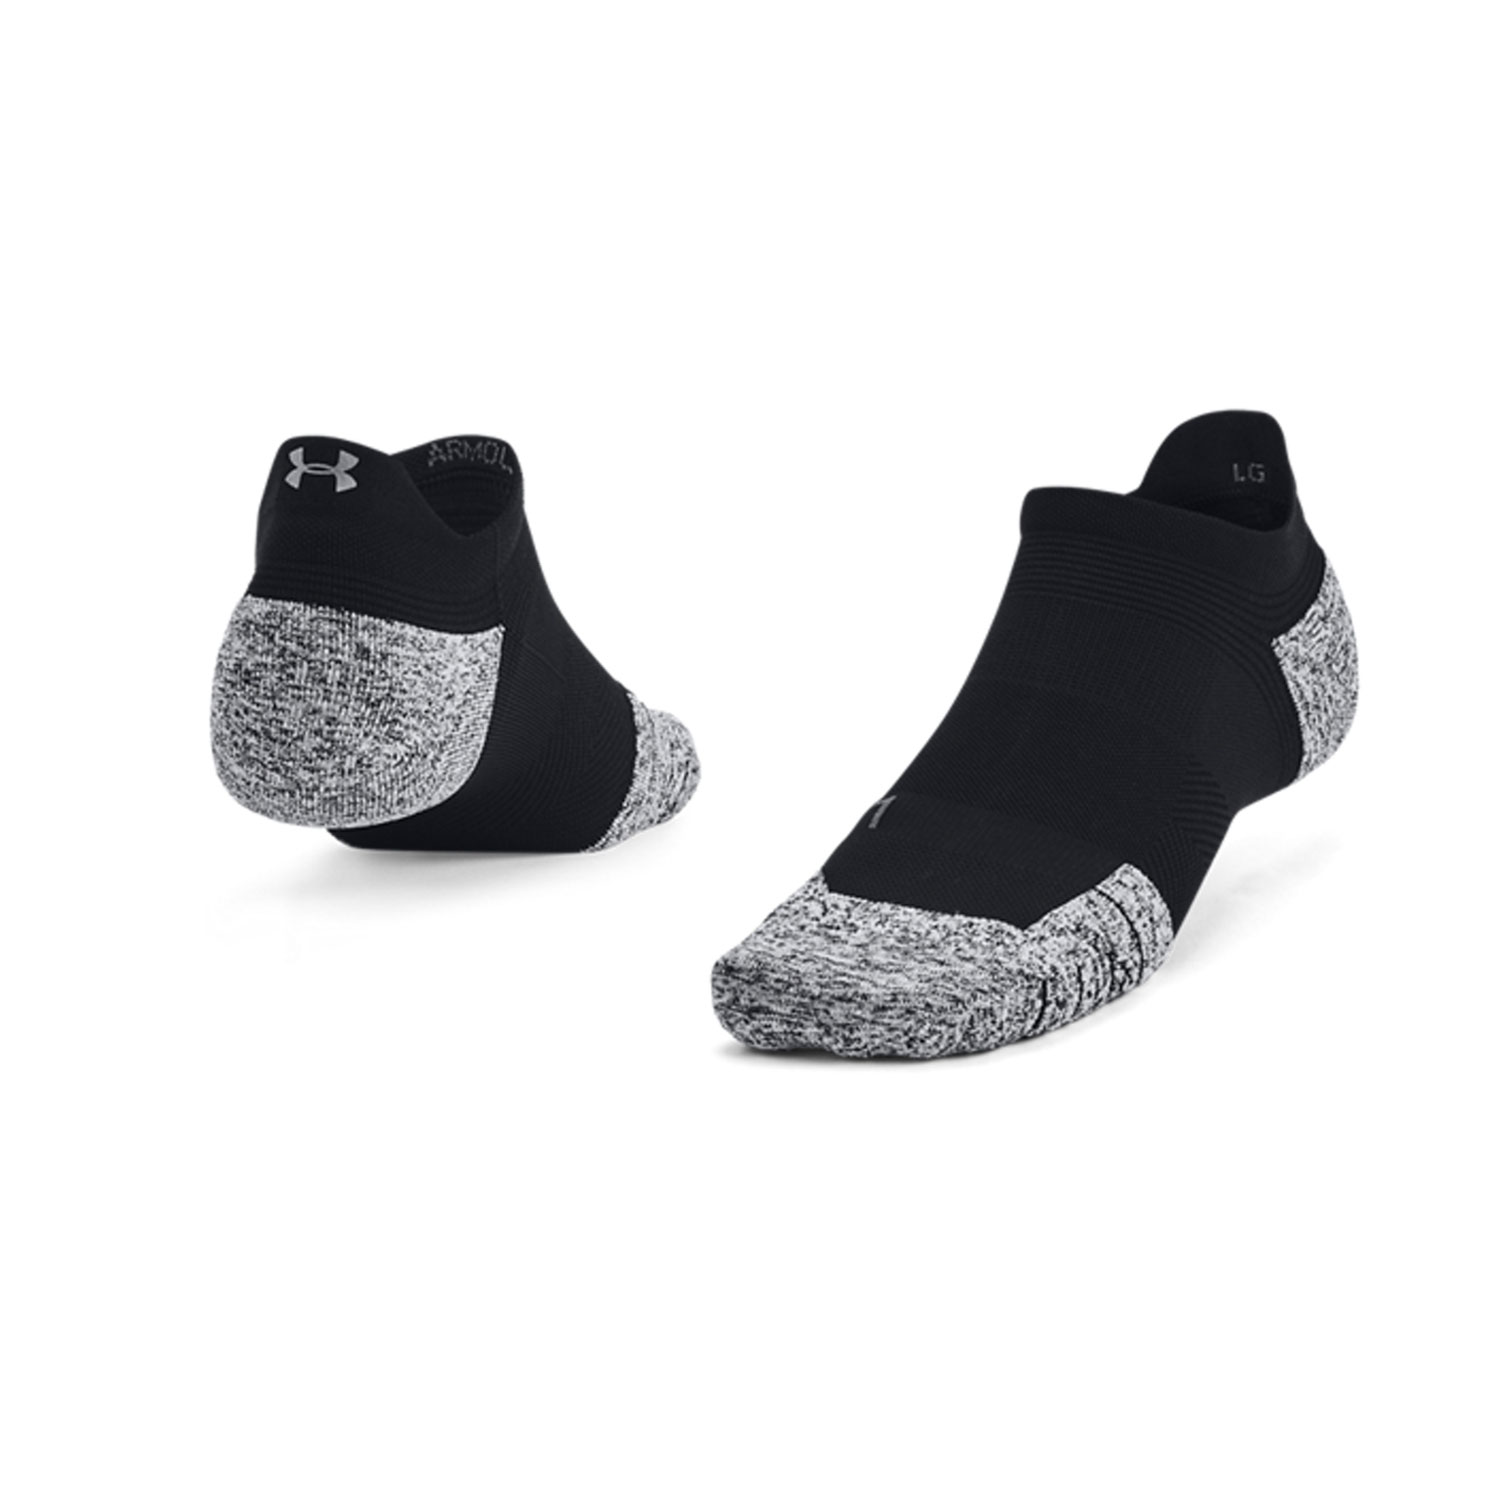 Under Armour ArmourDry Cushion Socks - Black/Pitch Gray/Reflective